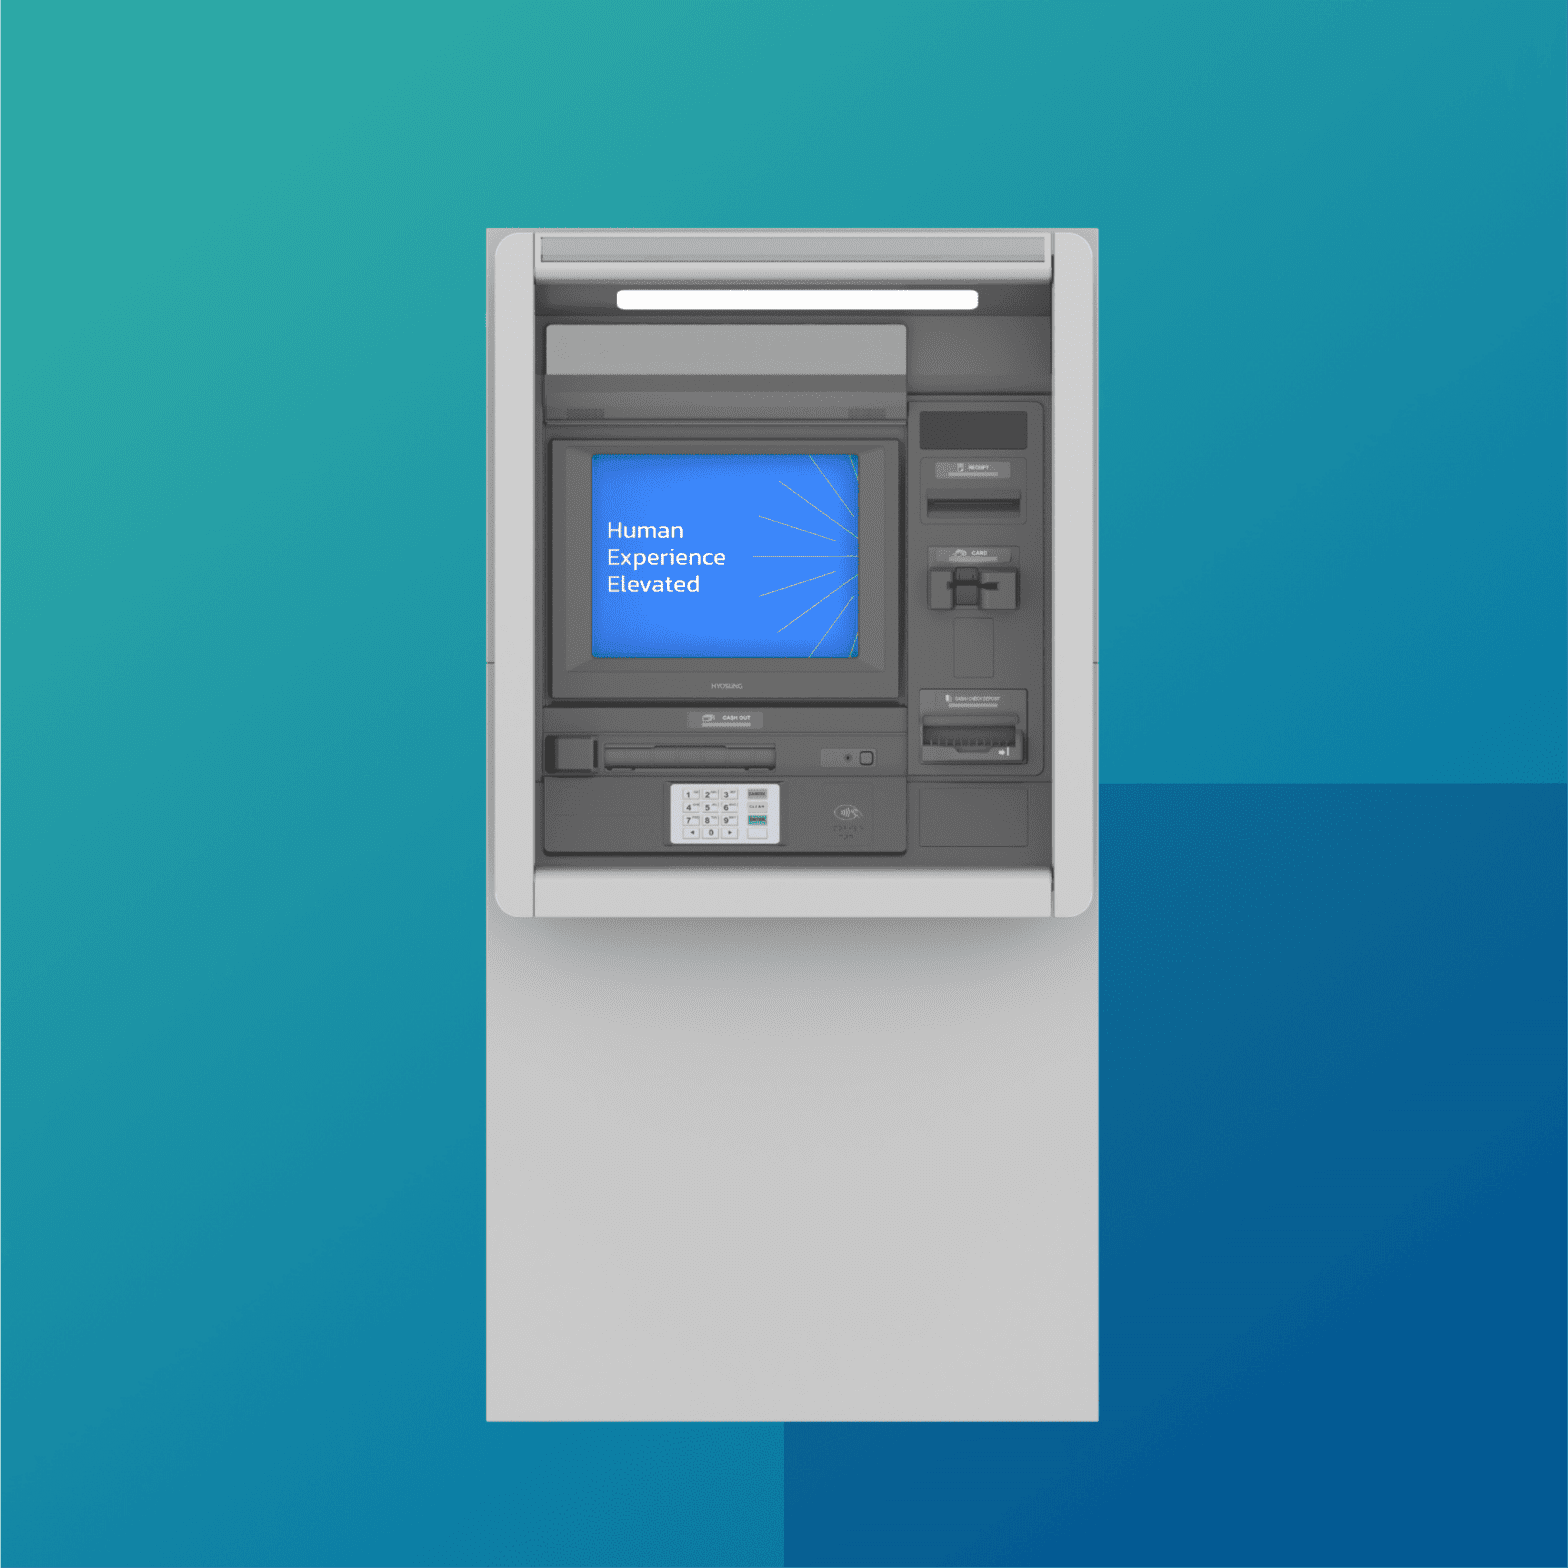 Hyosung 7D(MX7600DA) 이미지, Hyosung의 입증되고 신뢰할 수 있는 완전한 기능의 ATM